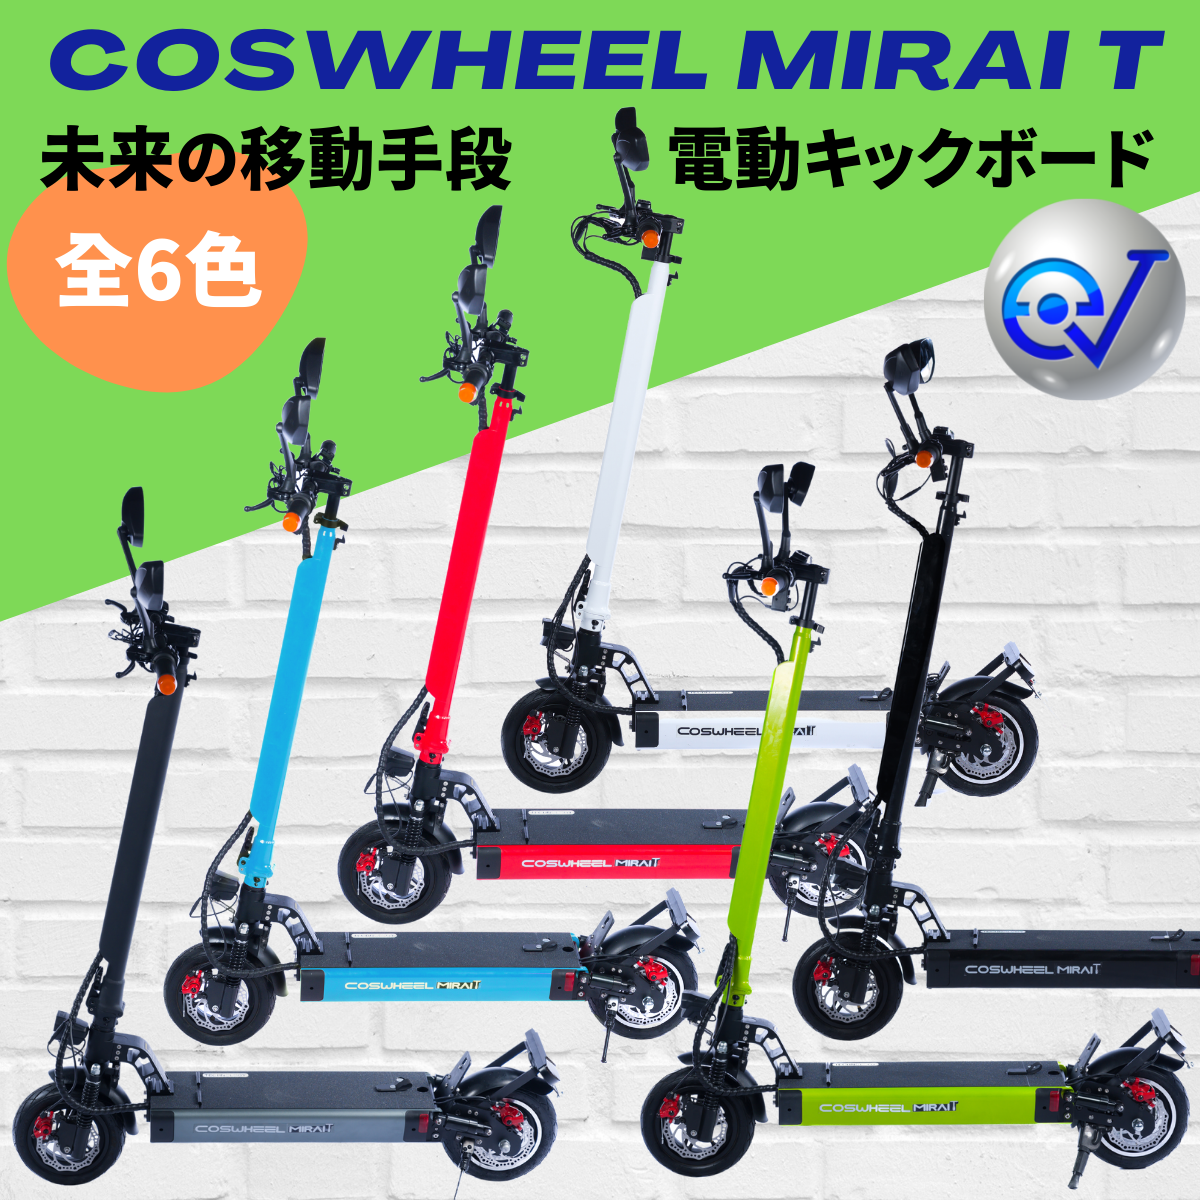 COSWHEEL MIRAI T 電動キックボード